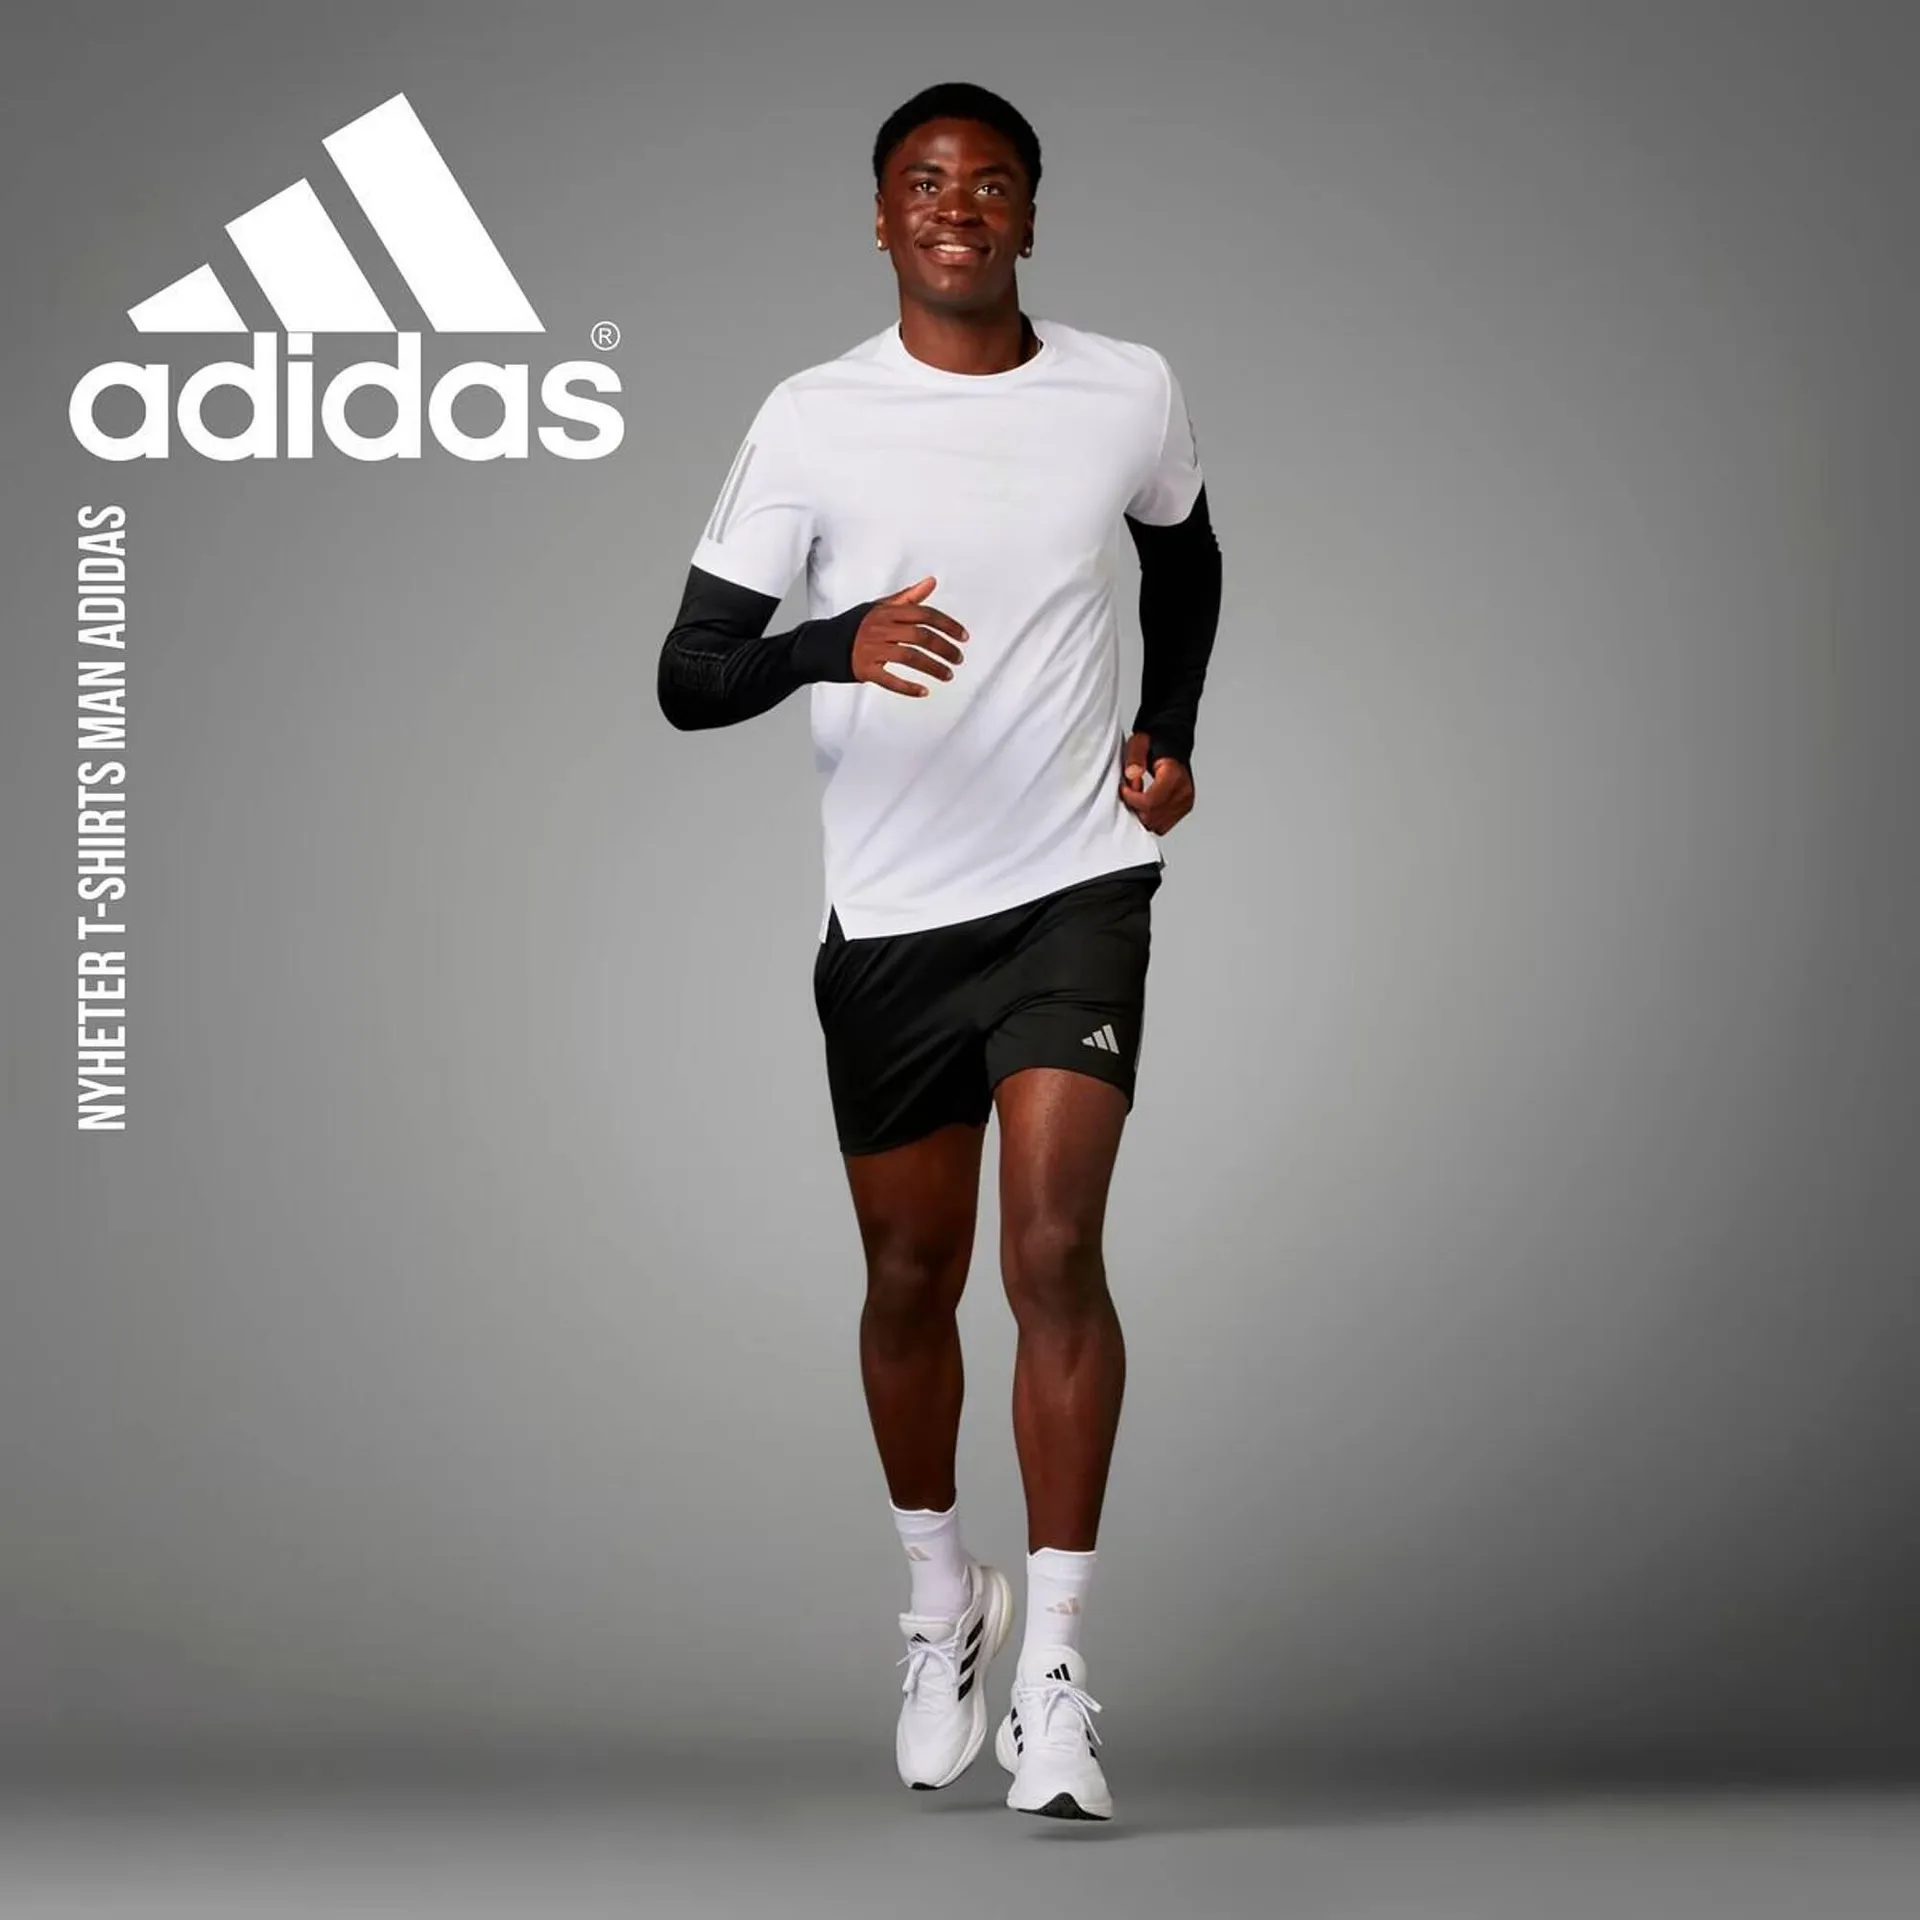 Adidas reklamblad